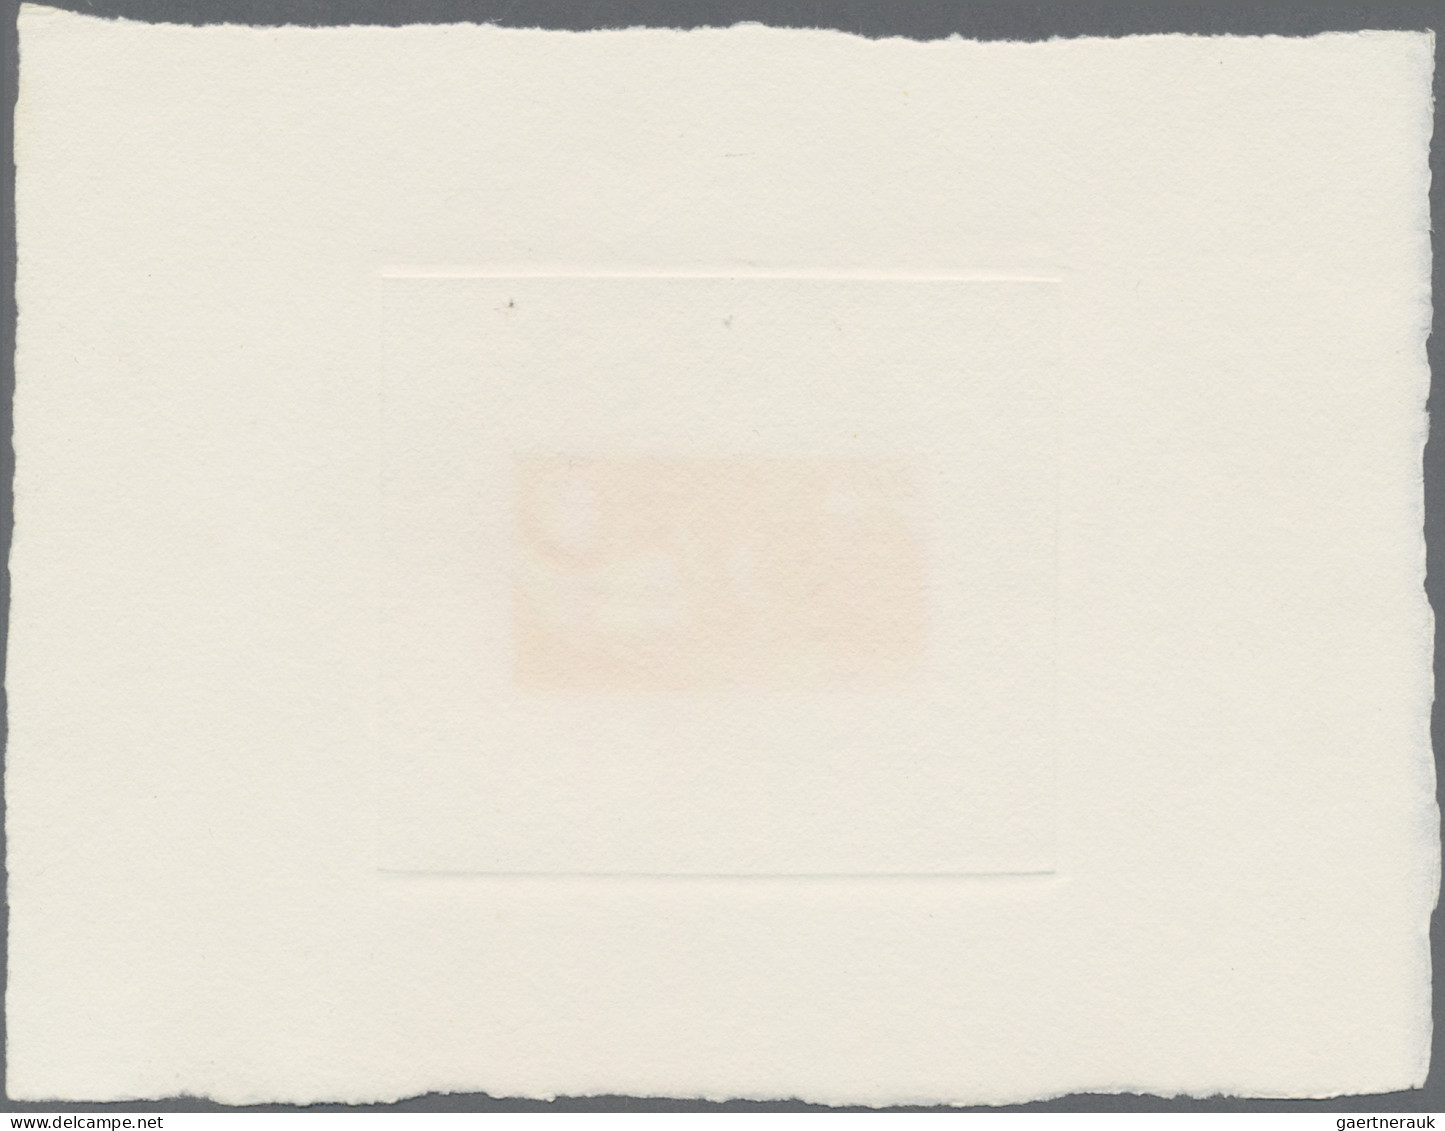 Monaco: 1955, 200fr. Albert Schweitzer, Epreuve D'artiste In Brown-black, Signed - Unused Stamps